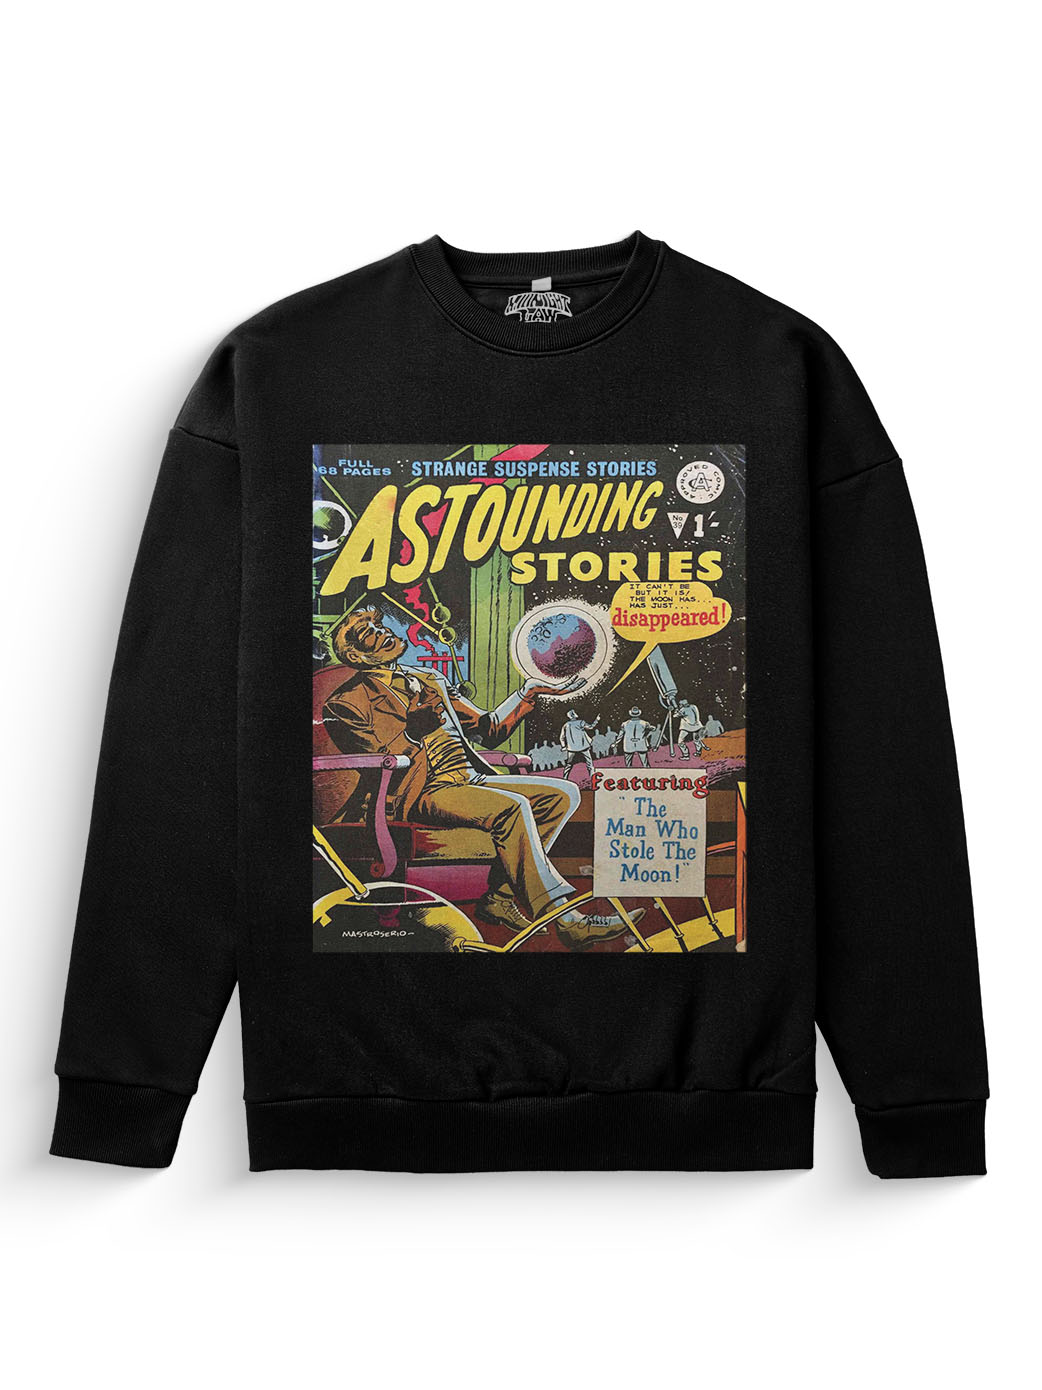 Astounding Stories Sweatshirt